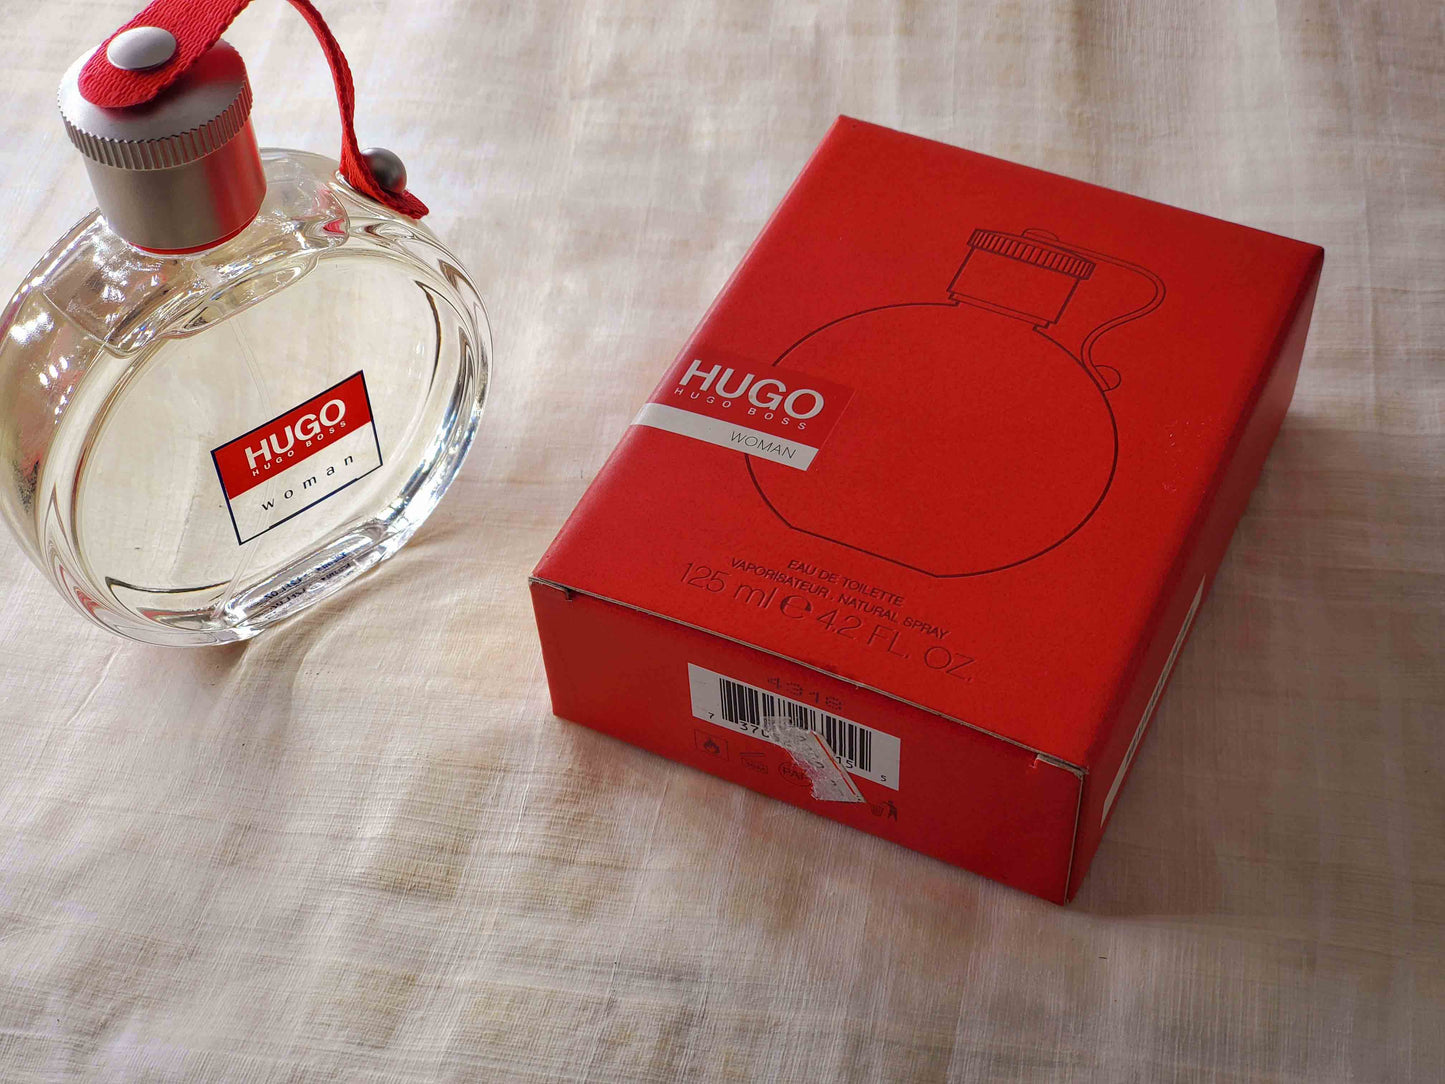 Hugo Woman Hugo Boss for women EDT Spray 125 ml 4.2 oz, Vintage, Rare